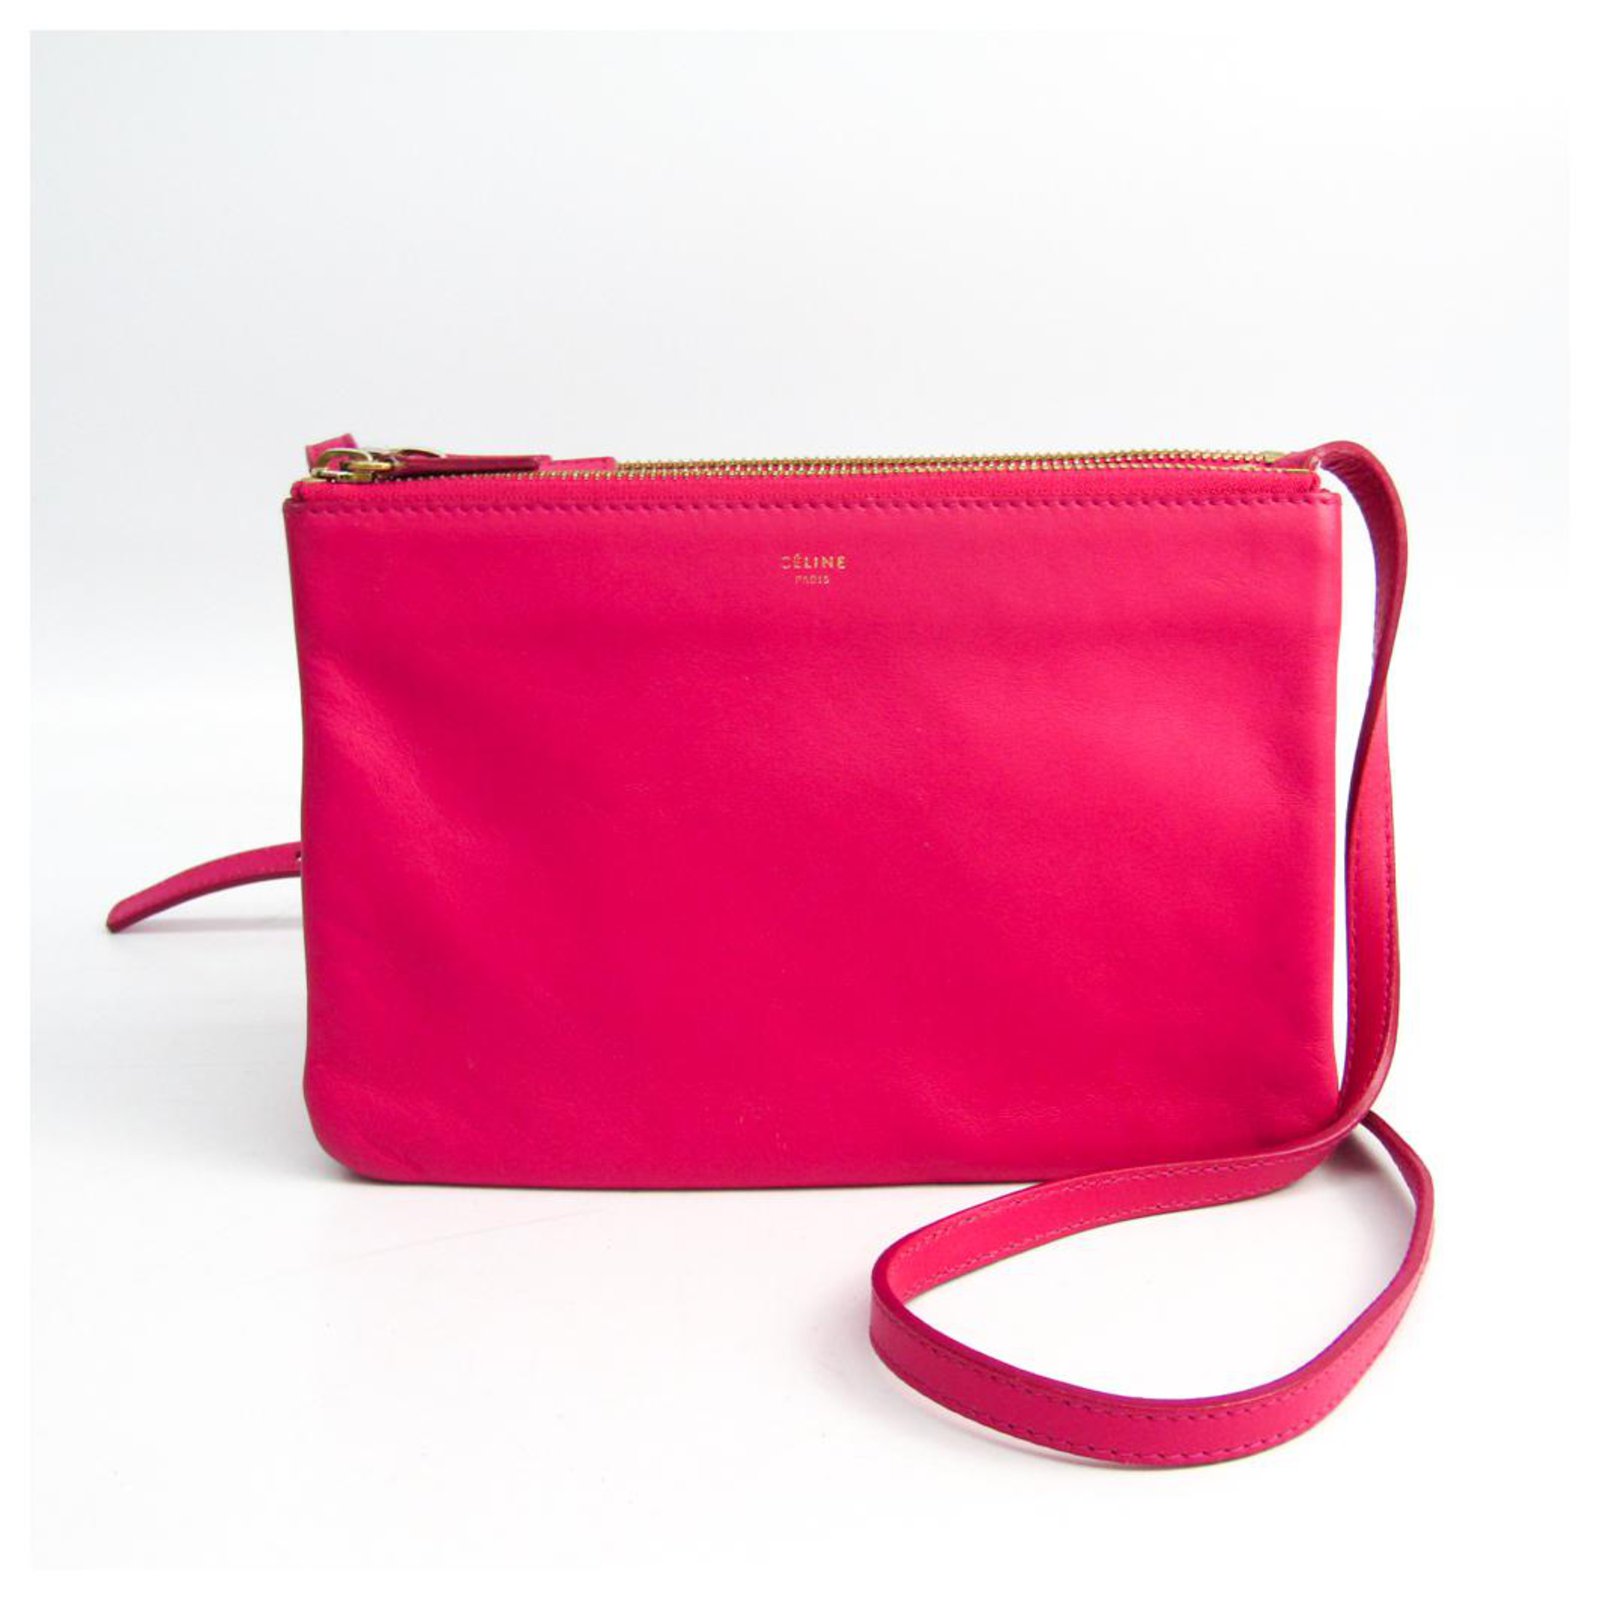 Céline Celine Pink Small Trio Leather Crossbody Bag Pony-style calfskin ...